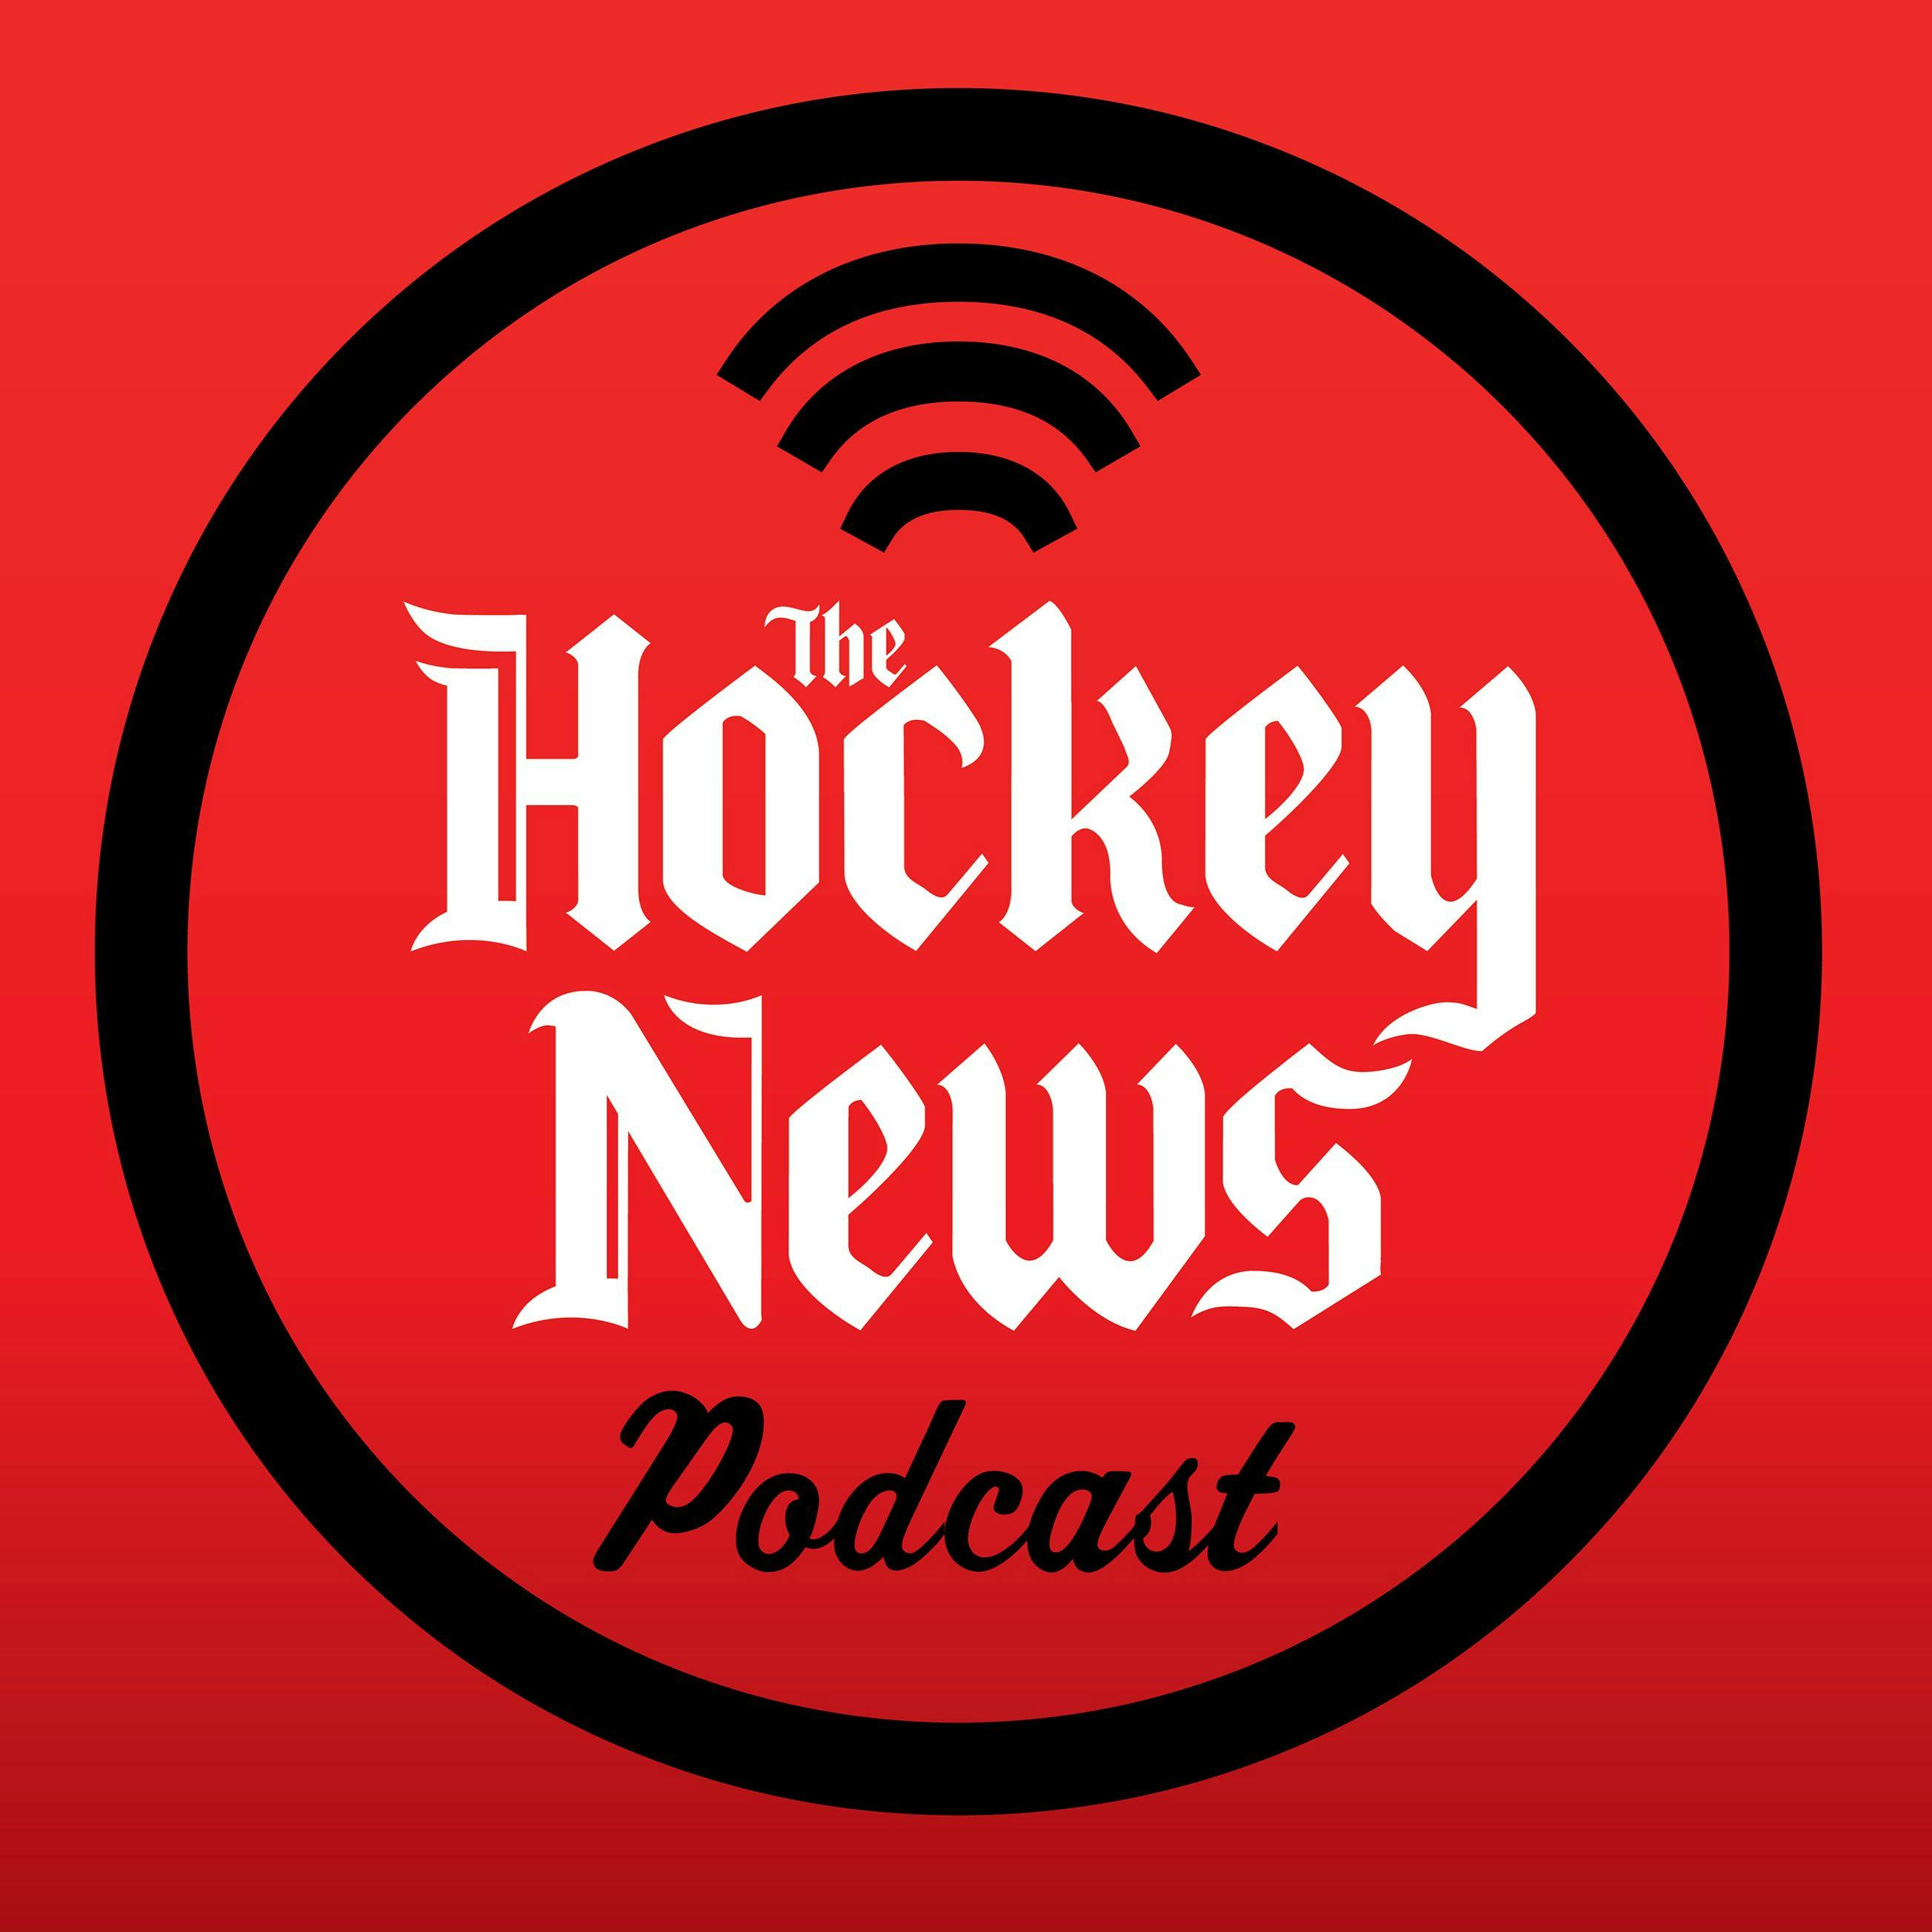 The Hockey News Podcast: All-Mailbag Edition, Vol. 3